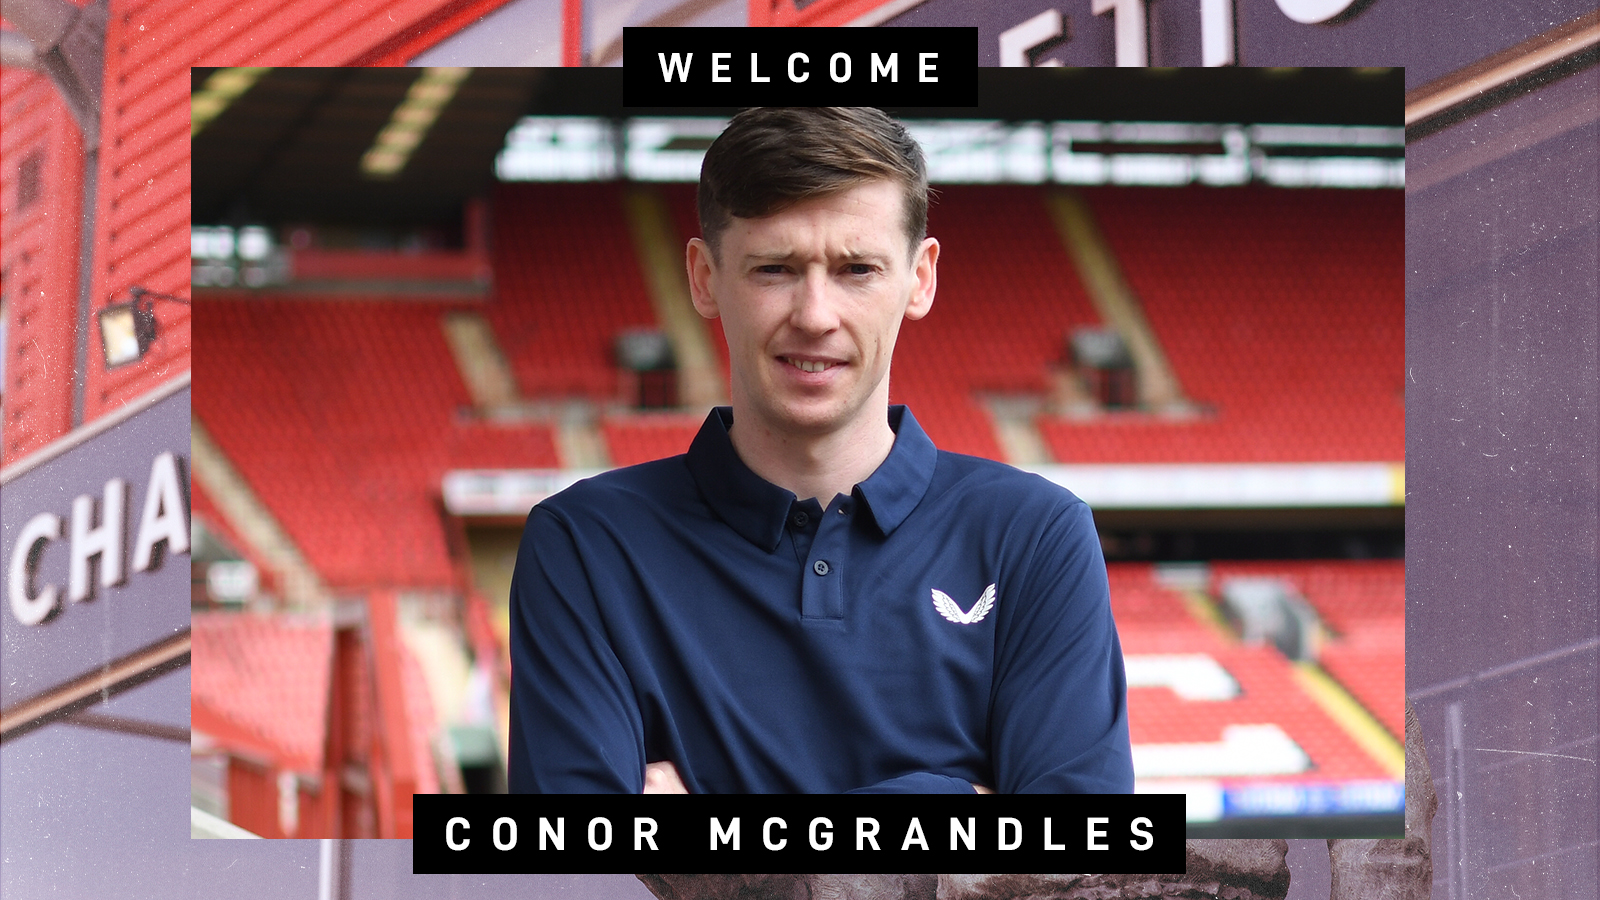 Conor McGrandles signs